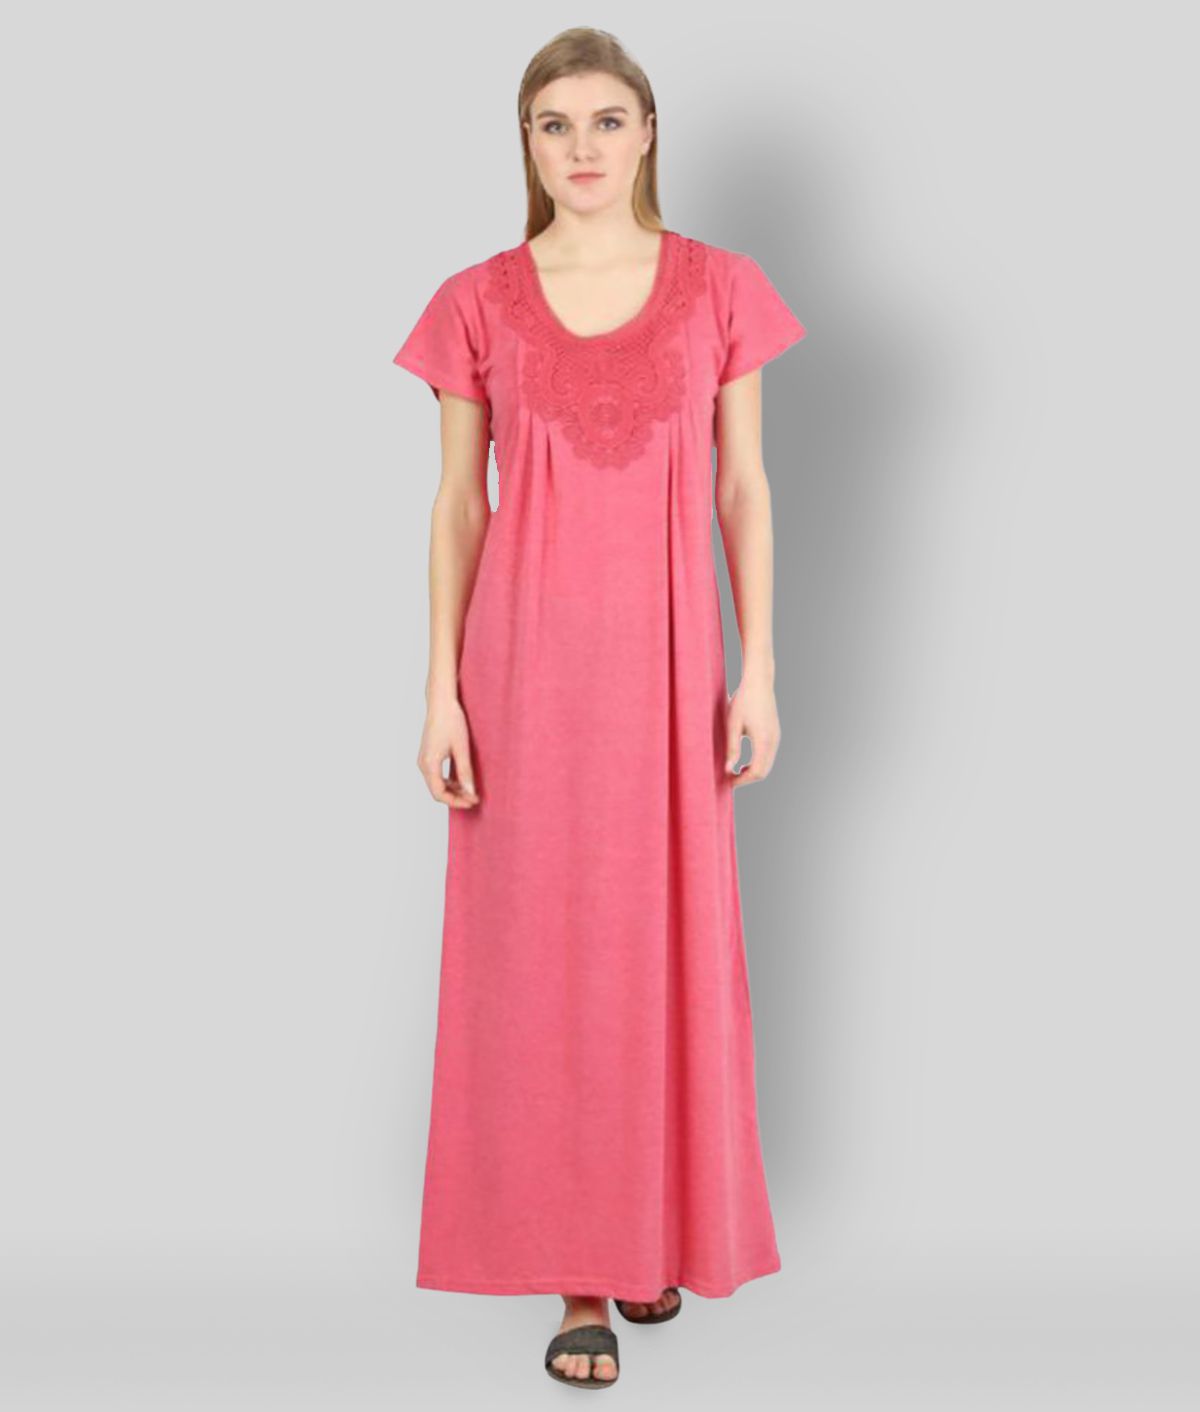 Affair - Pink Cotton Women's Nightwear Nighty & Night Gowns ( Pack of 1 )